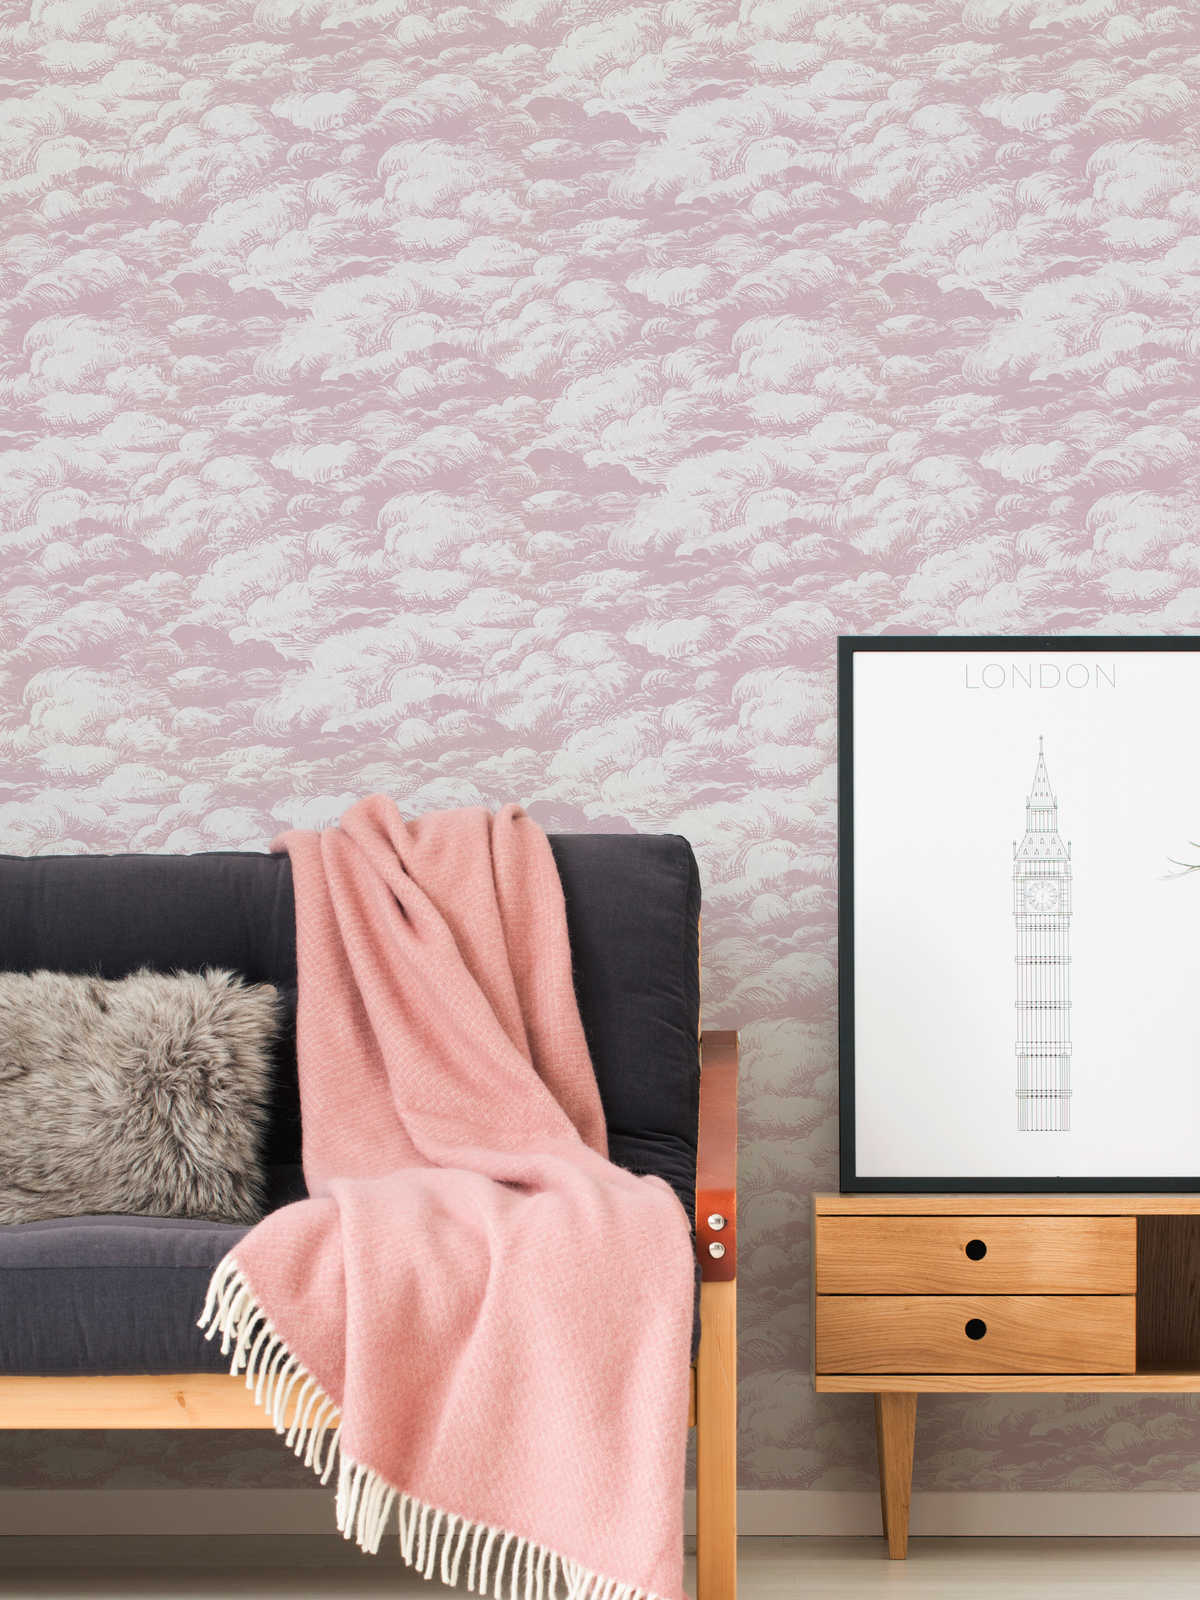             behang oud roze wolken ontwerp vintage landschap - roze, wit
        